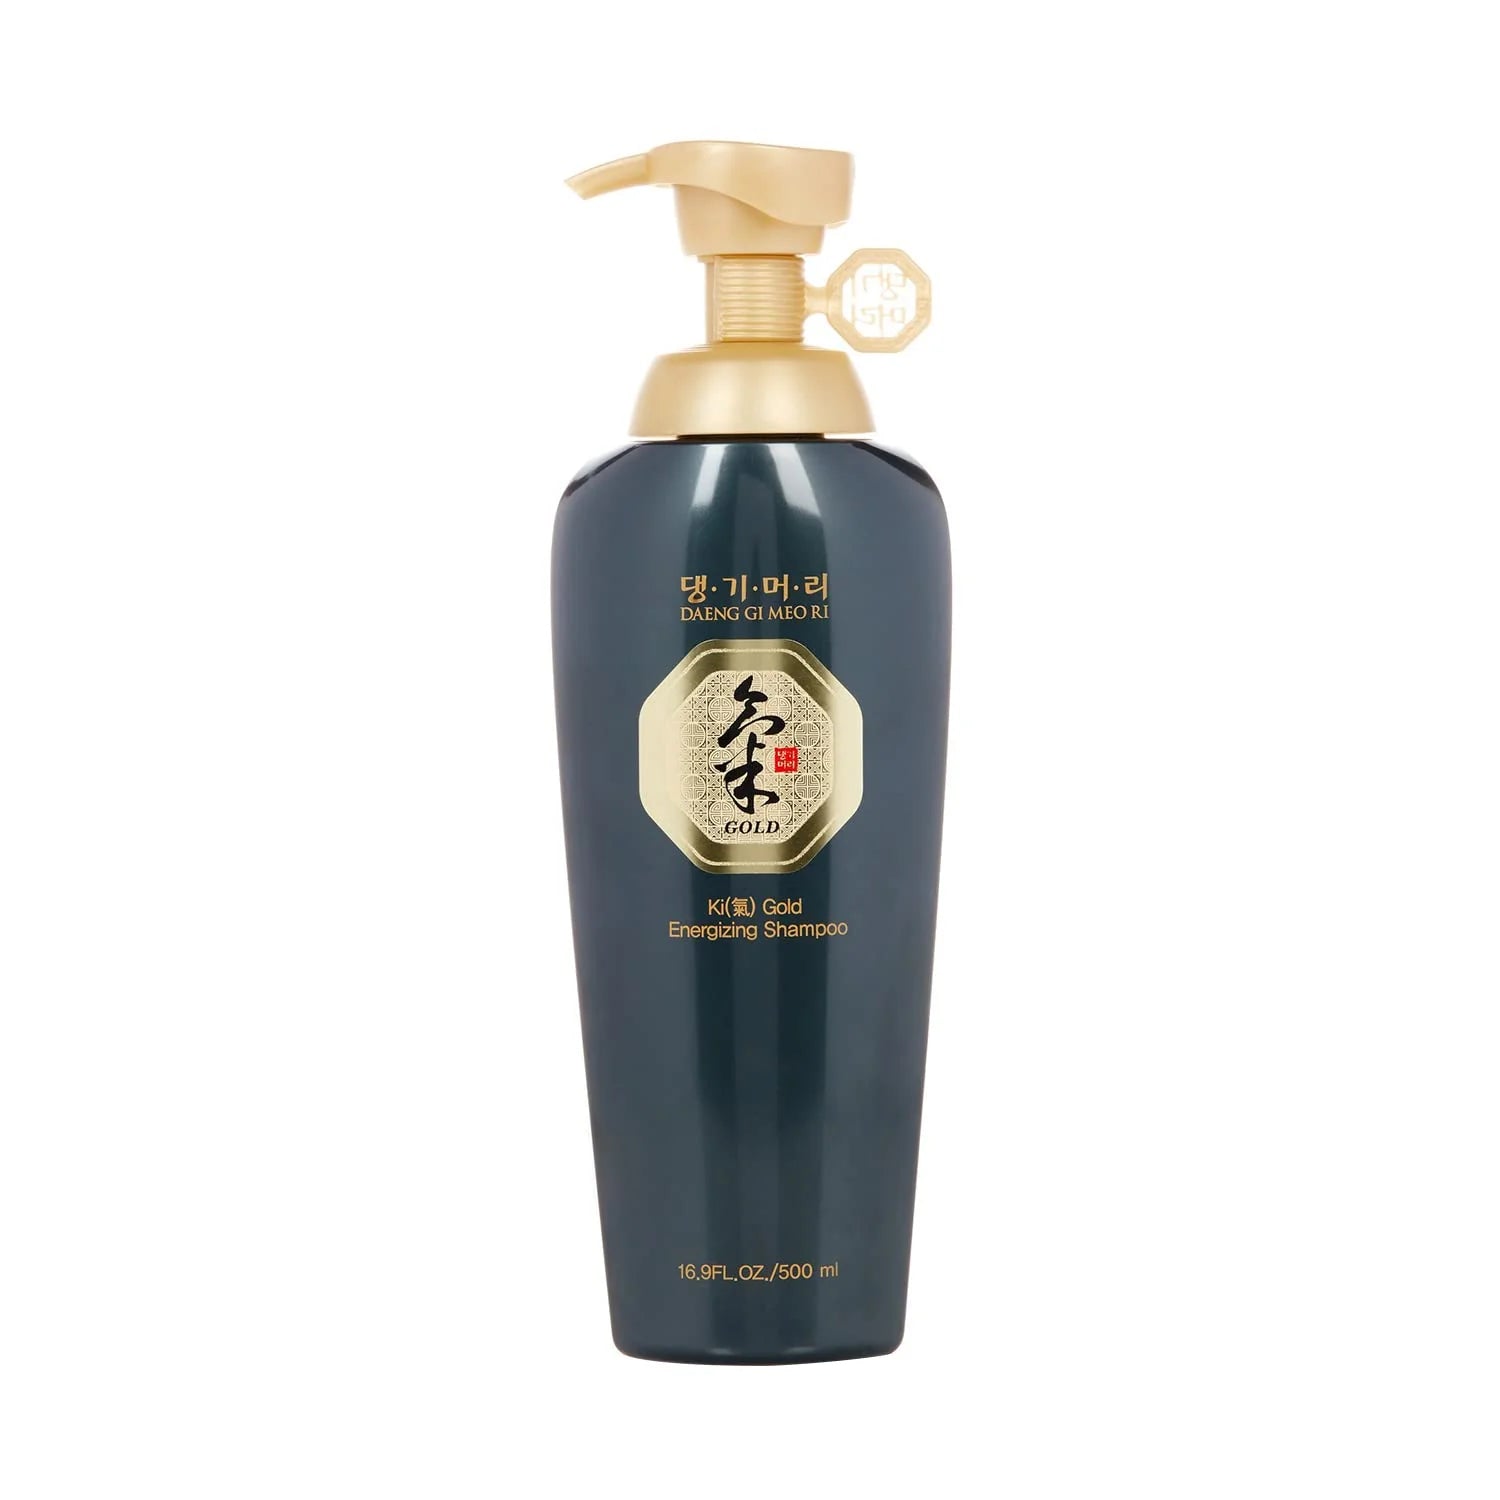 DAENG GI MEO RI - Ki Gold Energizing Shampoo